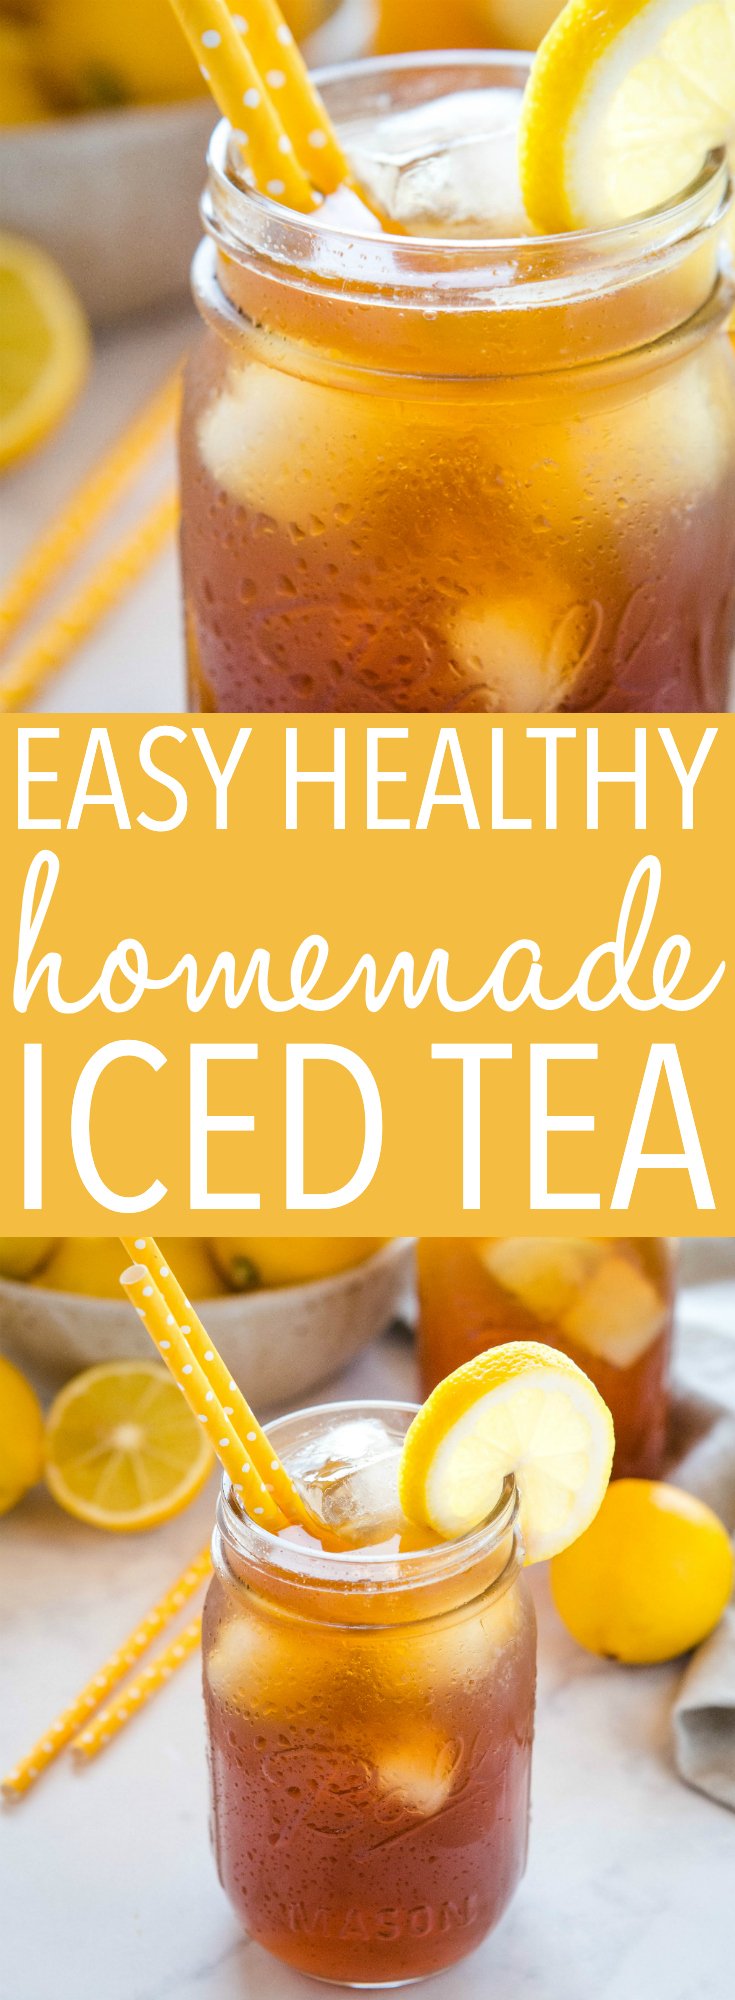 Easy Healthy Homemade Iced Tea Recipe Pinterest